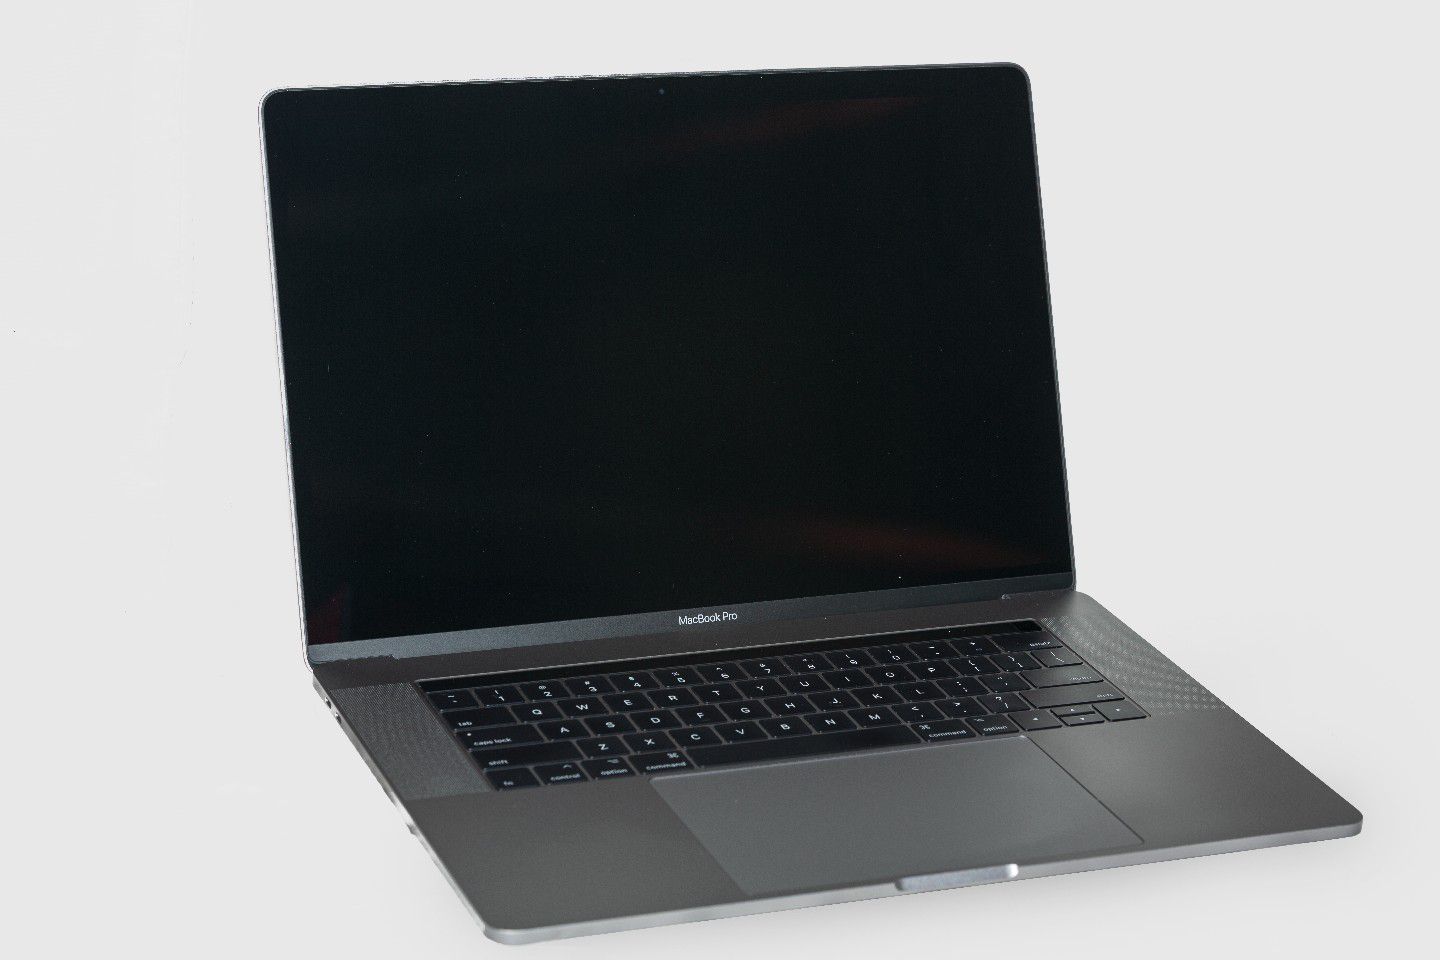 MacBook Pro, like new. A beast of a laptop!